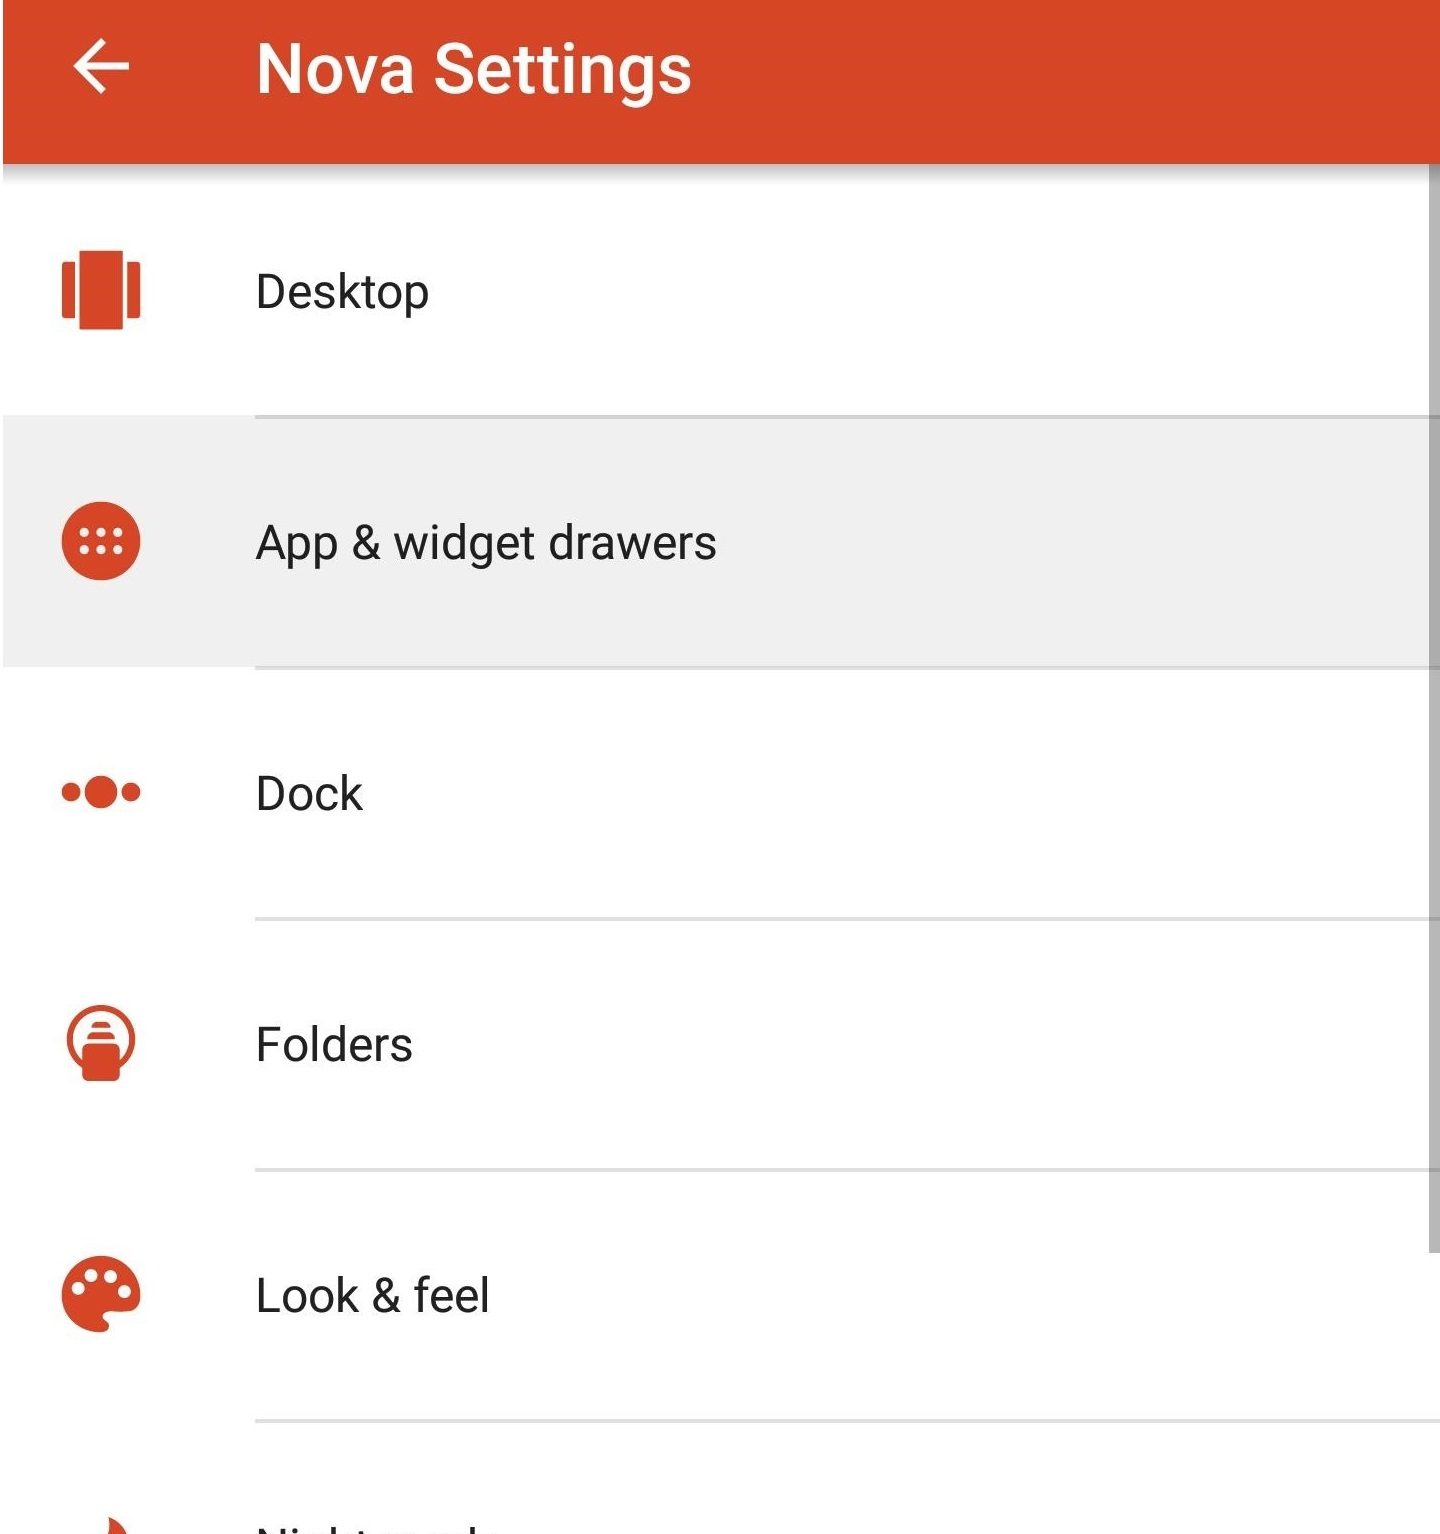 tap-on-app-and-widget-drawers-under-nova-settings-9289429